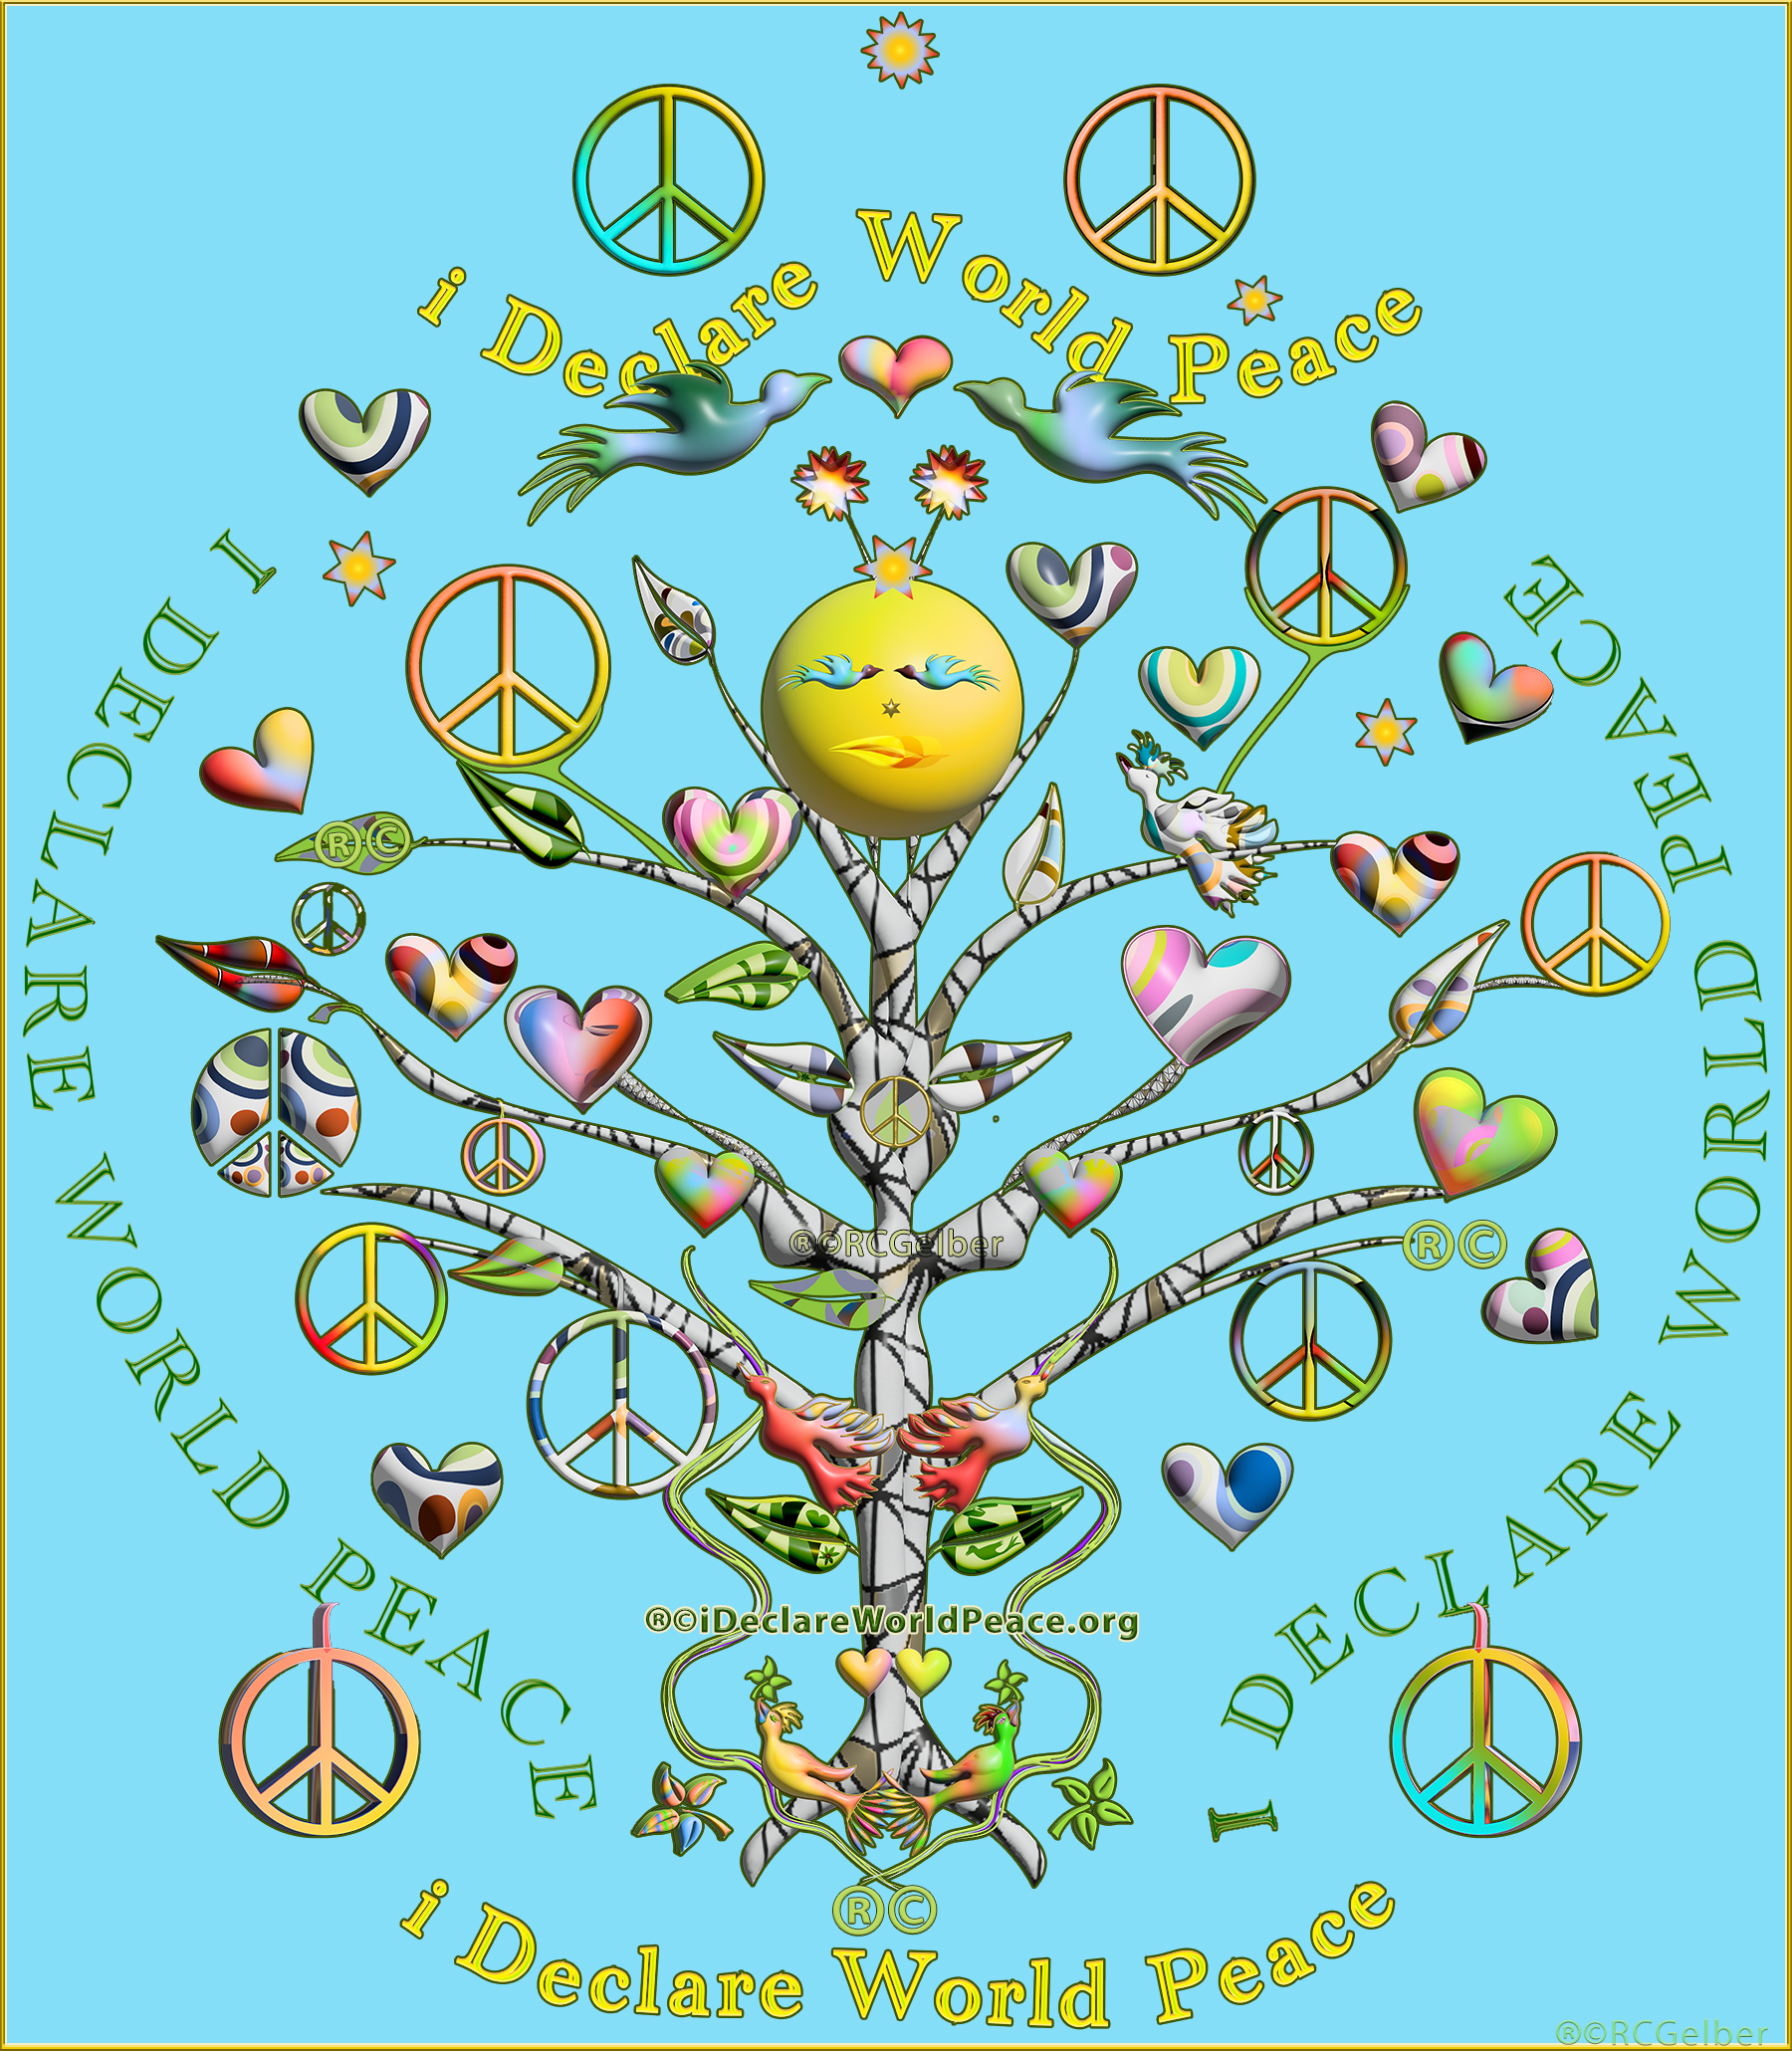 peace tree drawing